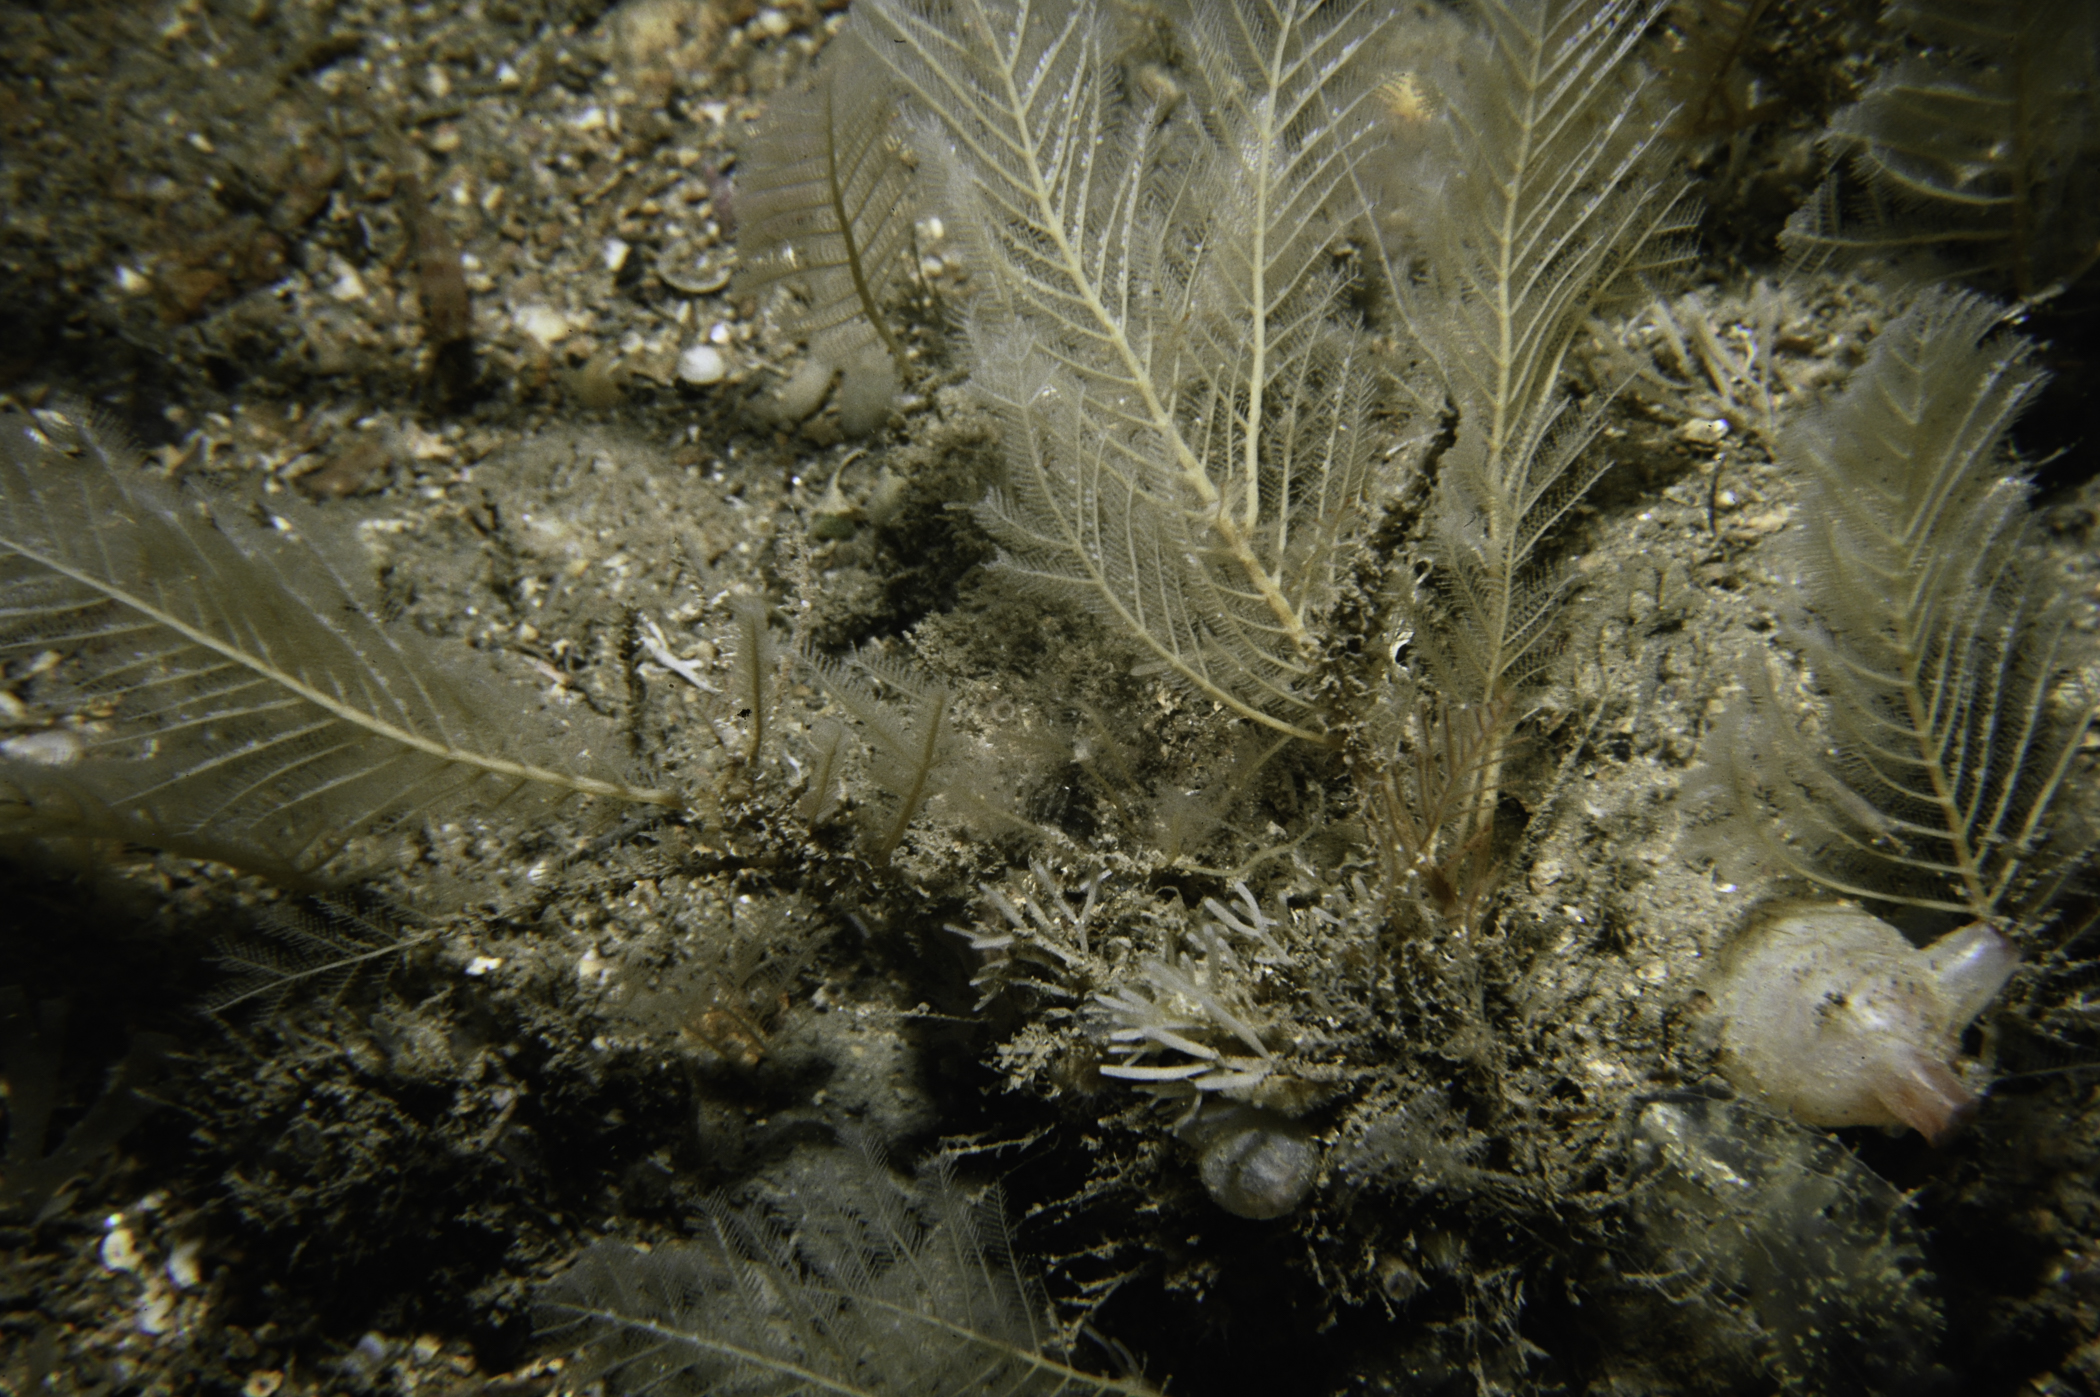 Polyplumaria flabellata, Cellaria fistulosa. Site: Arkill Bay, Rathlin Island. 